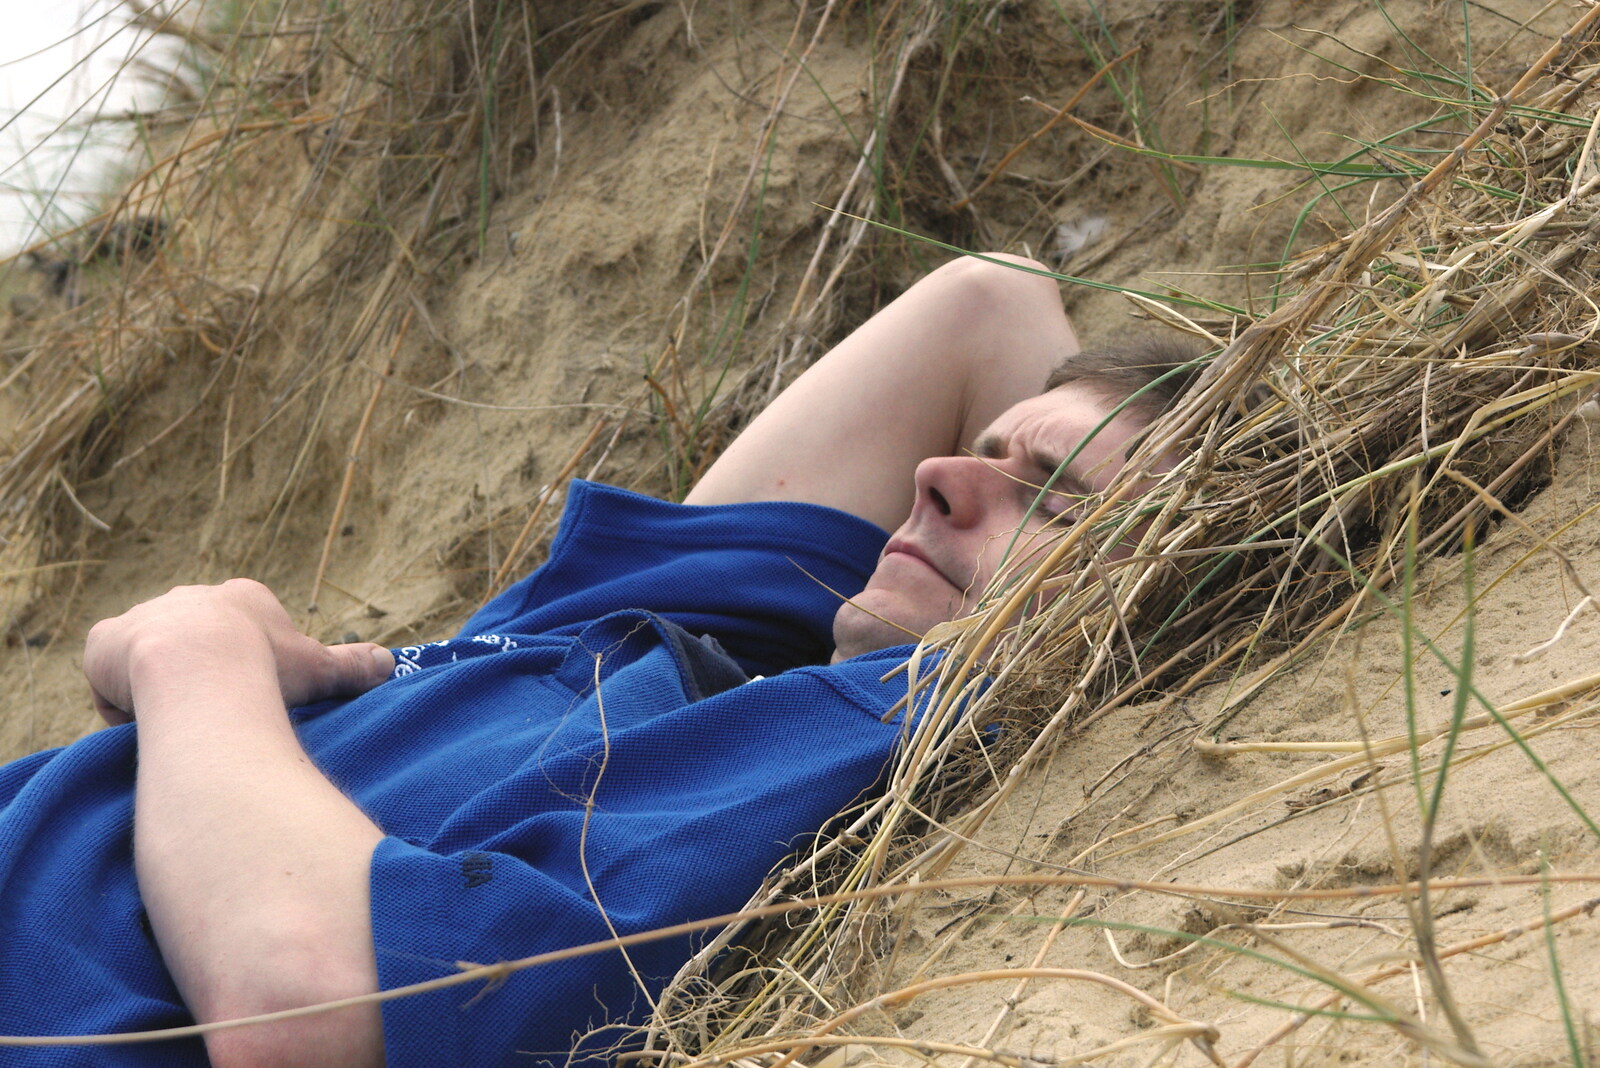 Ninja M sleeps in the dunes from The BSCC Charity Bike Ride, Walberswick, Suffolk - 9th July 2005